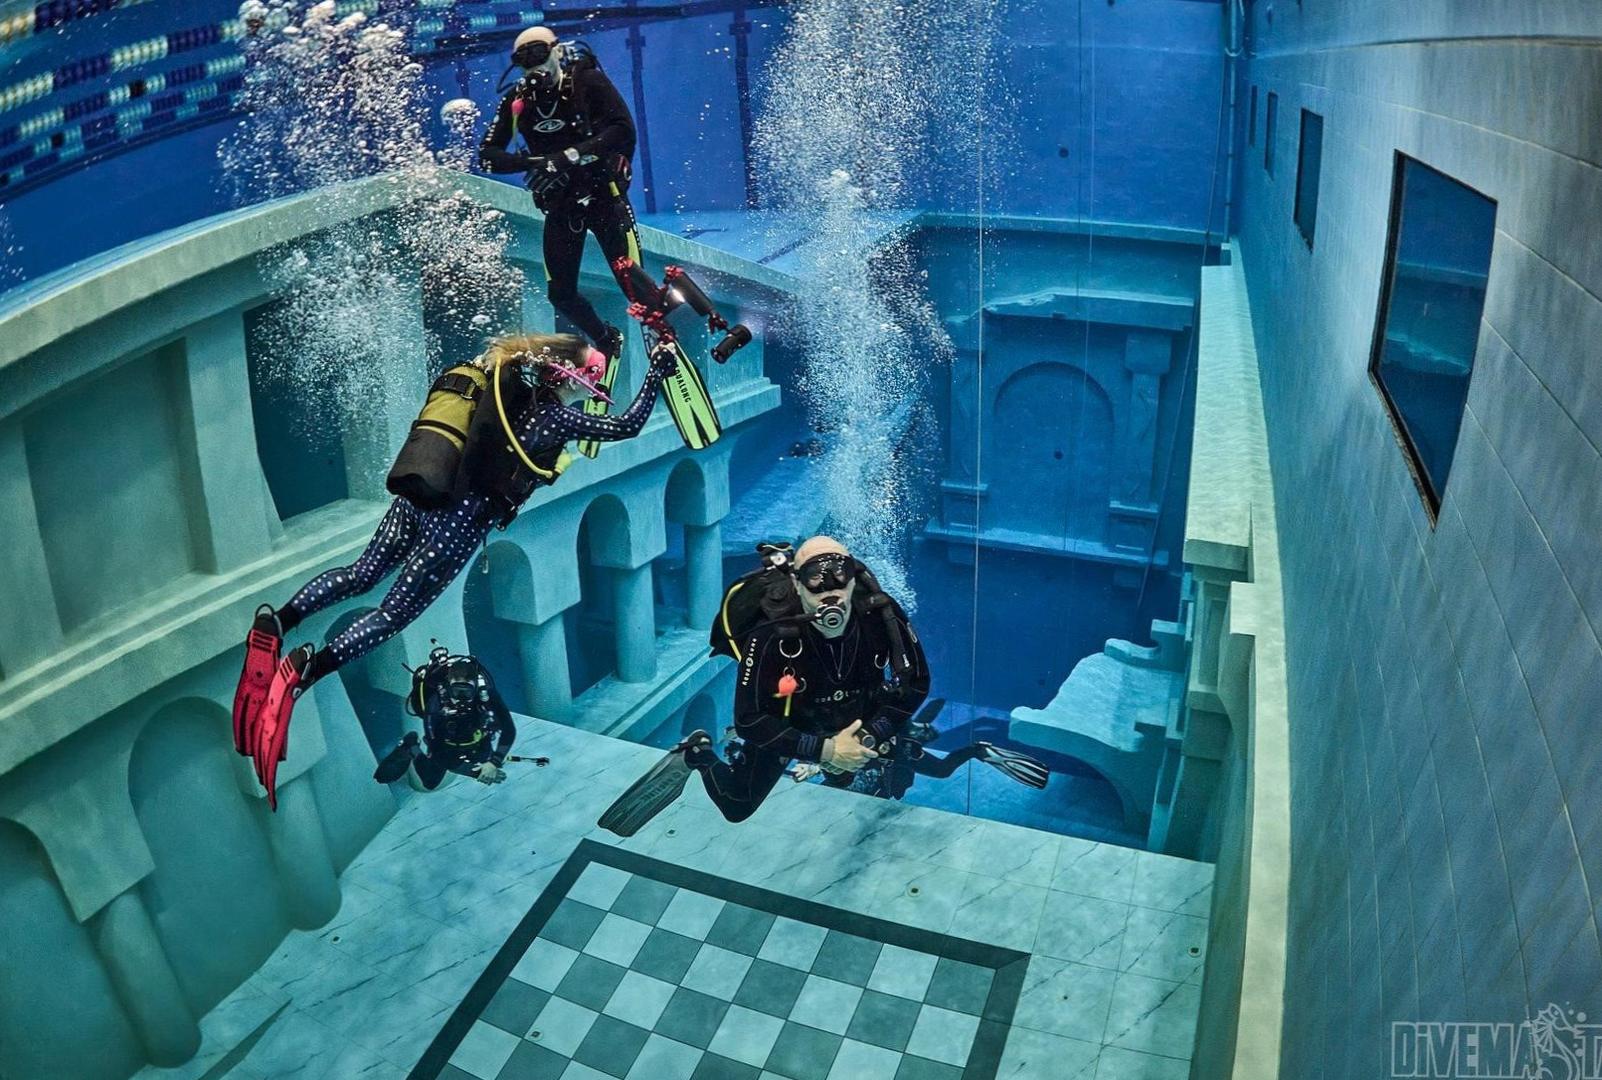  Откройте подводный мир: Тур дайвинг бассейн 